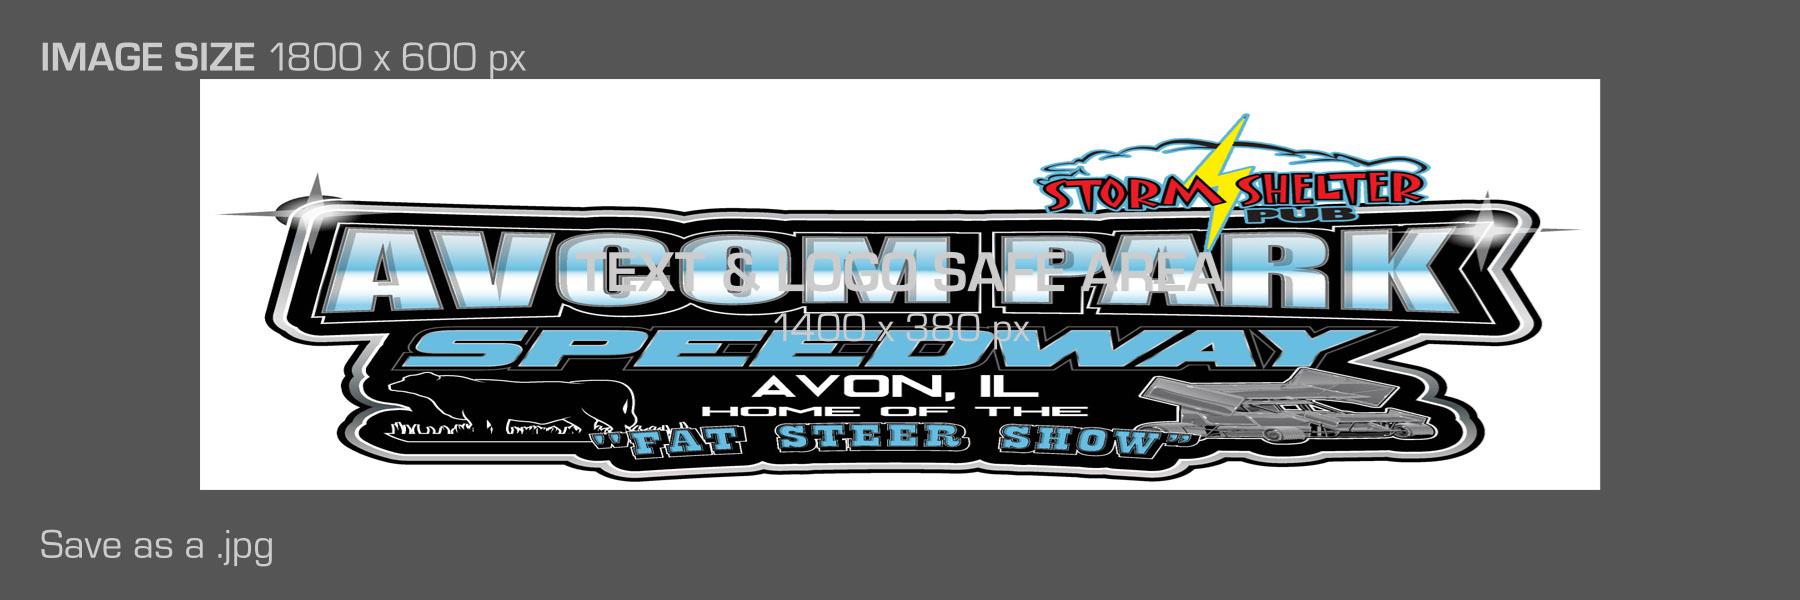 7/6/2021 - Avcom Park Speedway